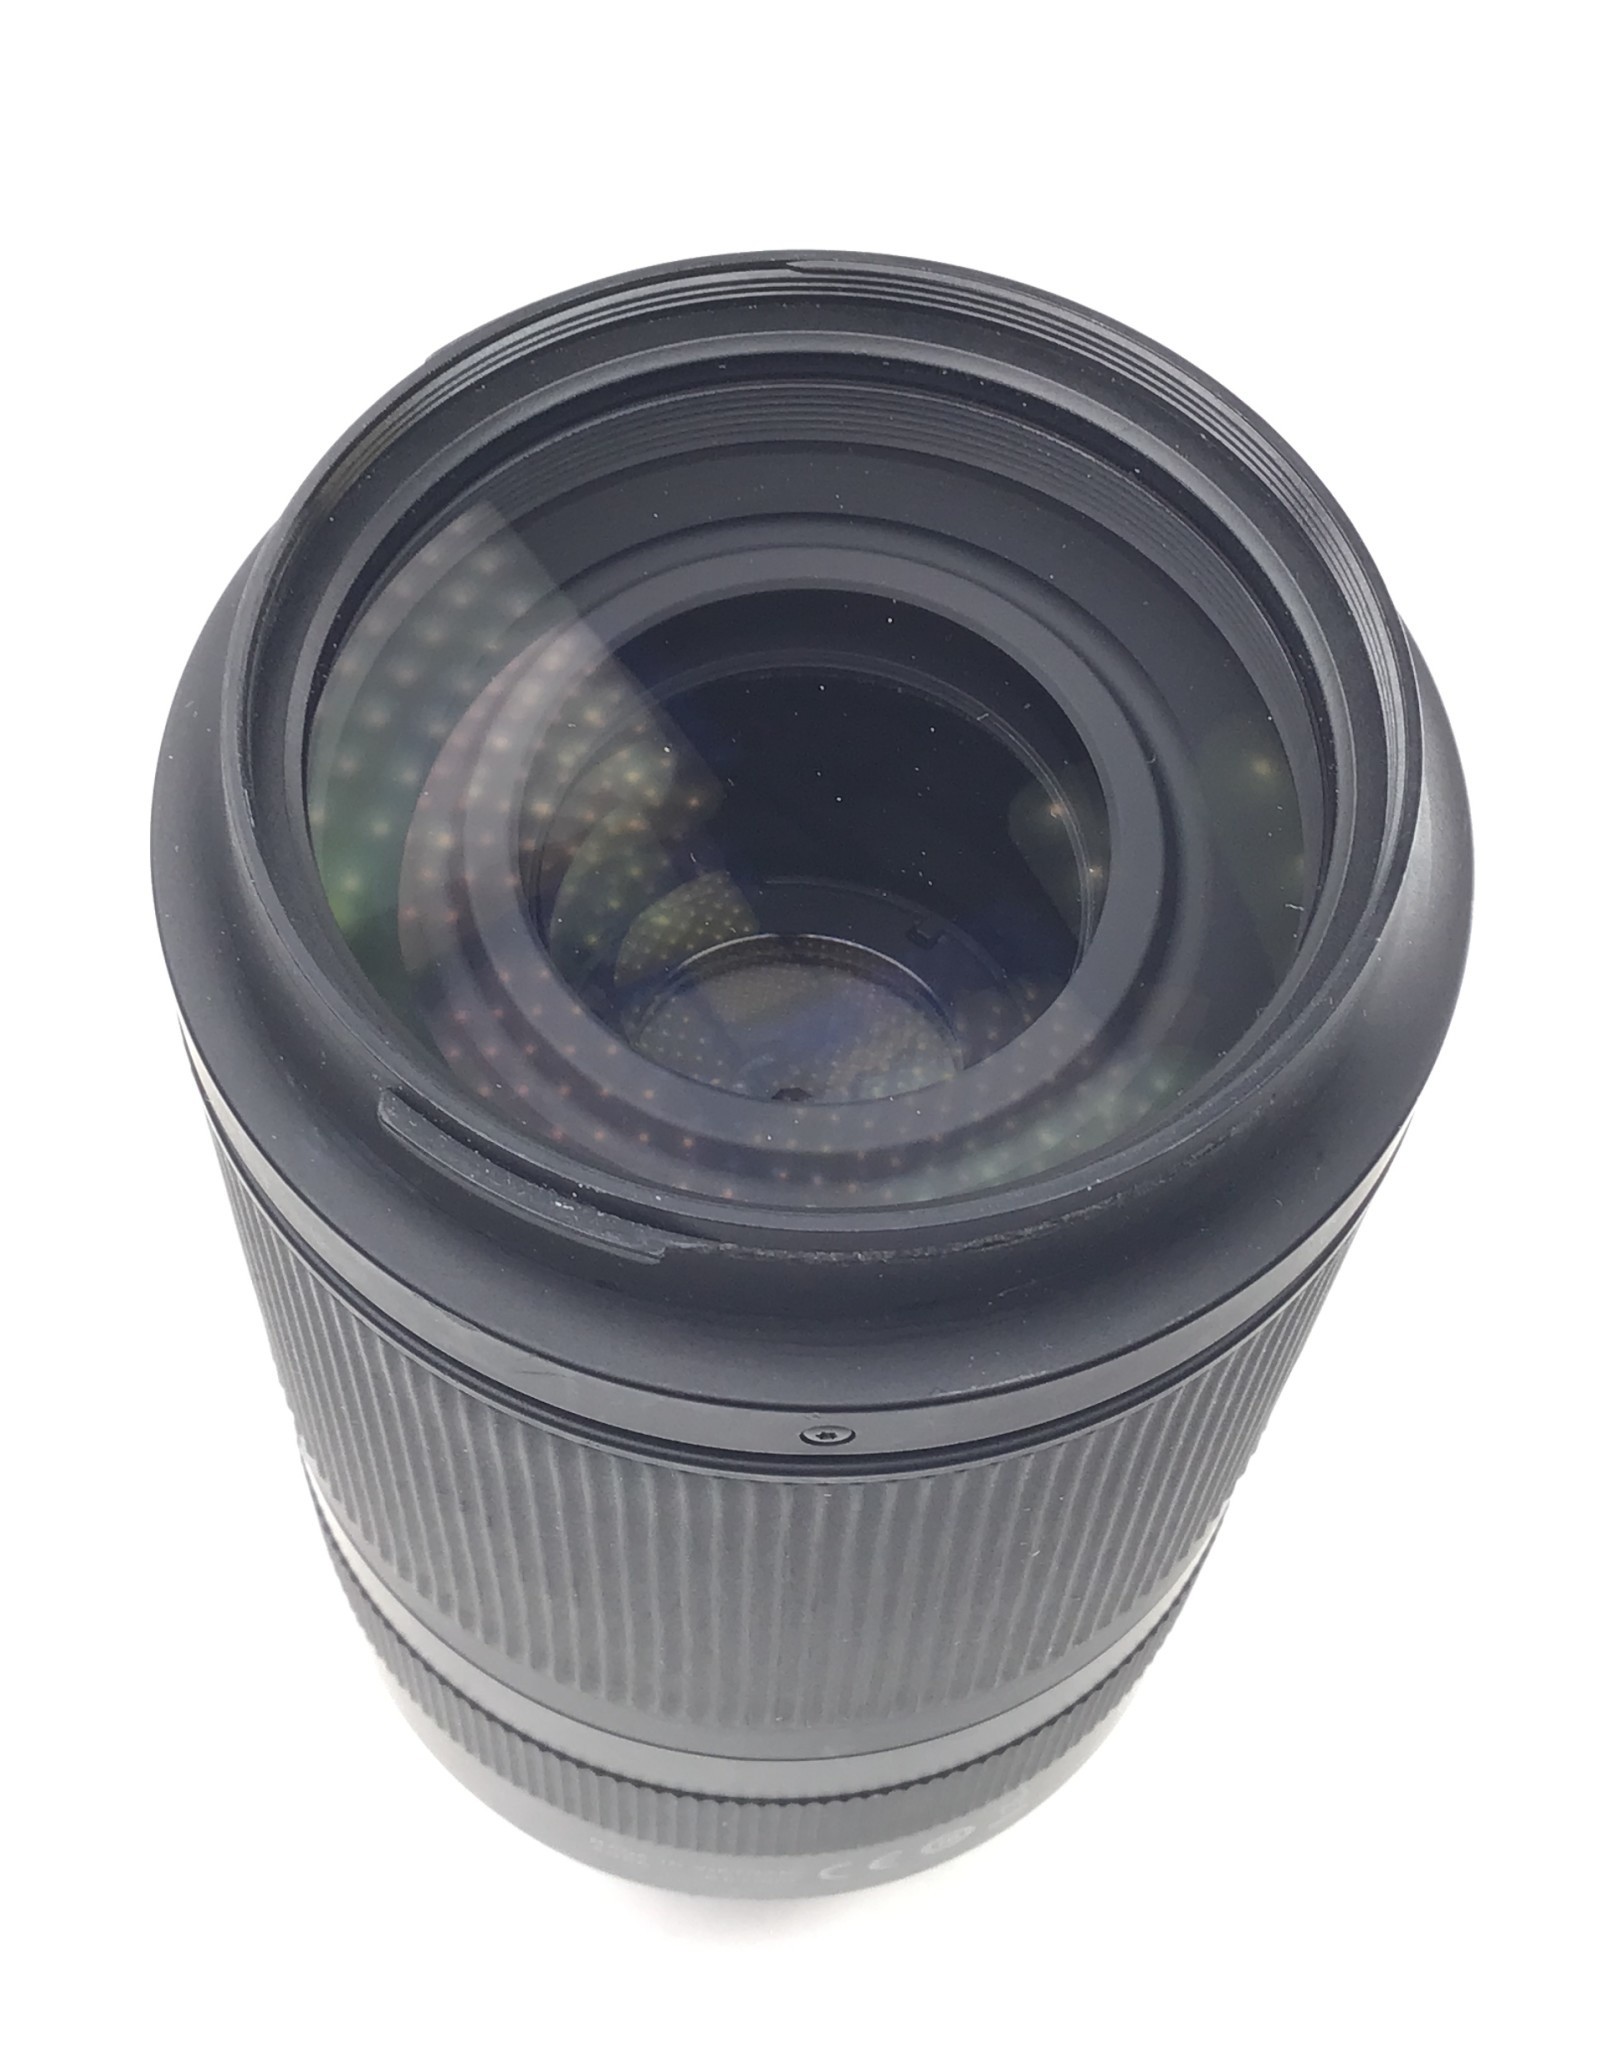 SONY Tamron 70-180mm f2.8 Di III VXD Lens No Hood Used Fair